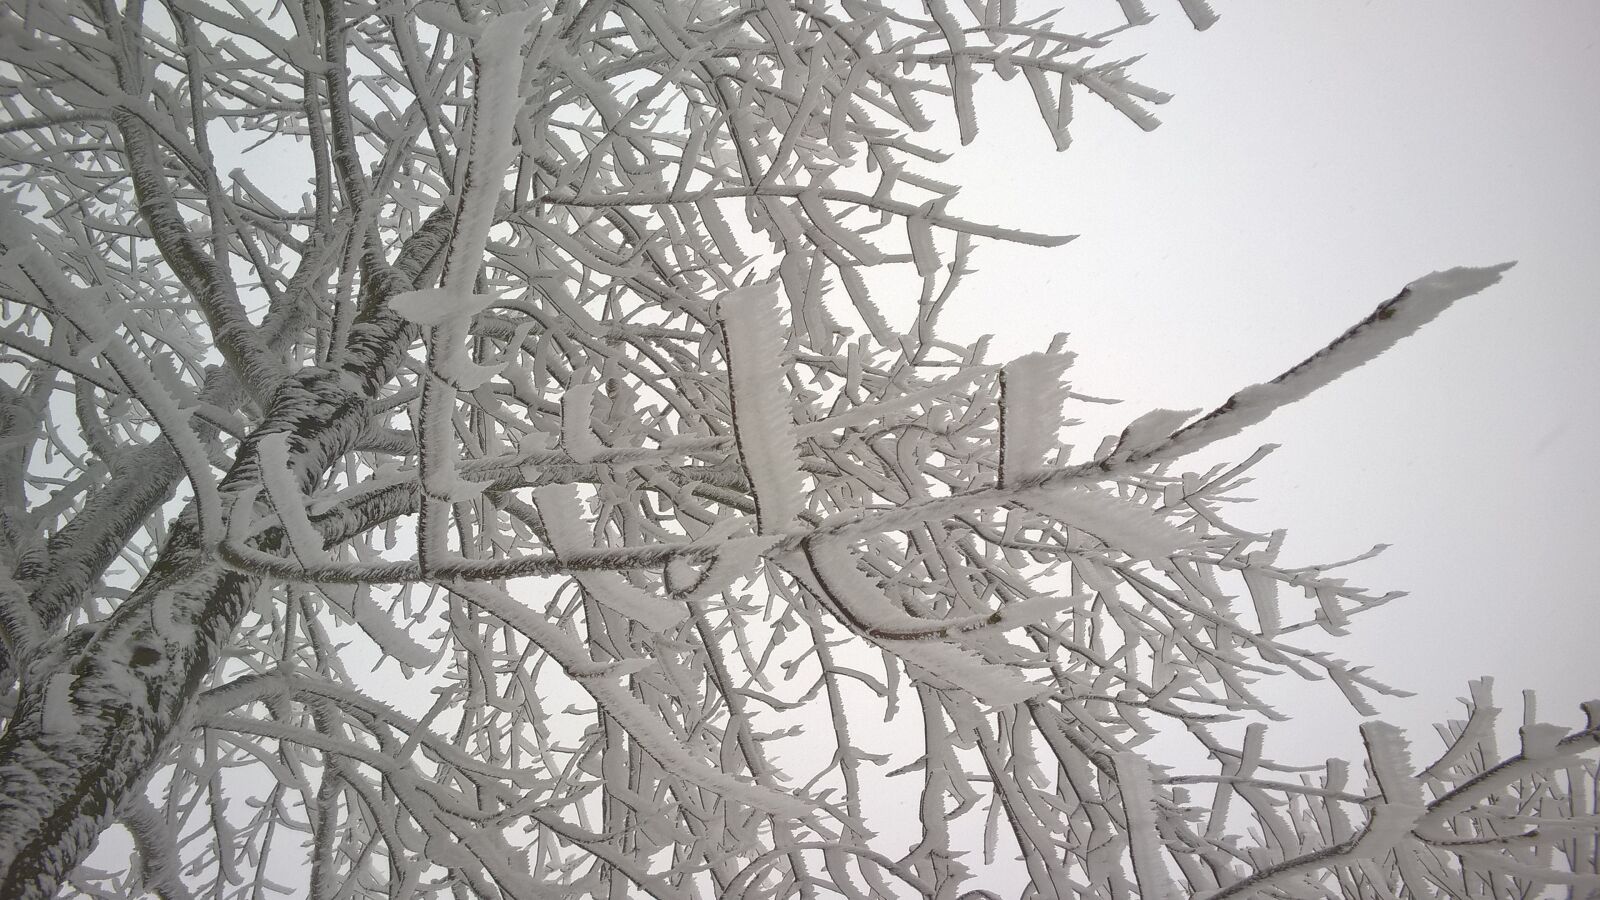 Nokia Lumia 830 sample photo. Branches, snow, snowy photography